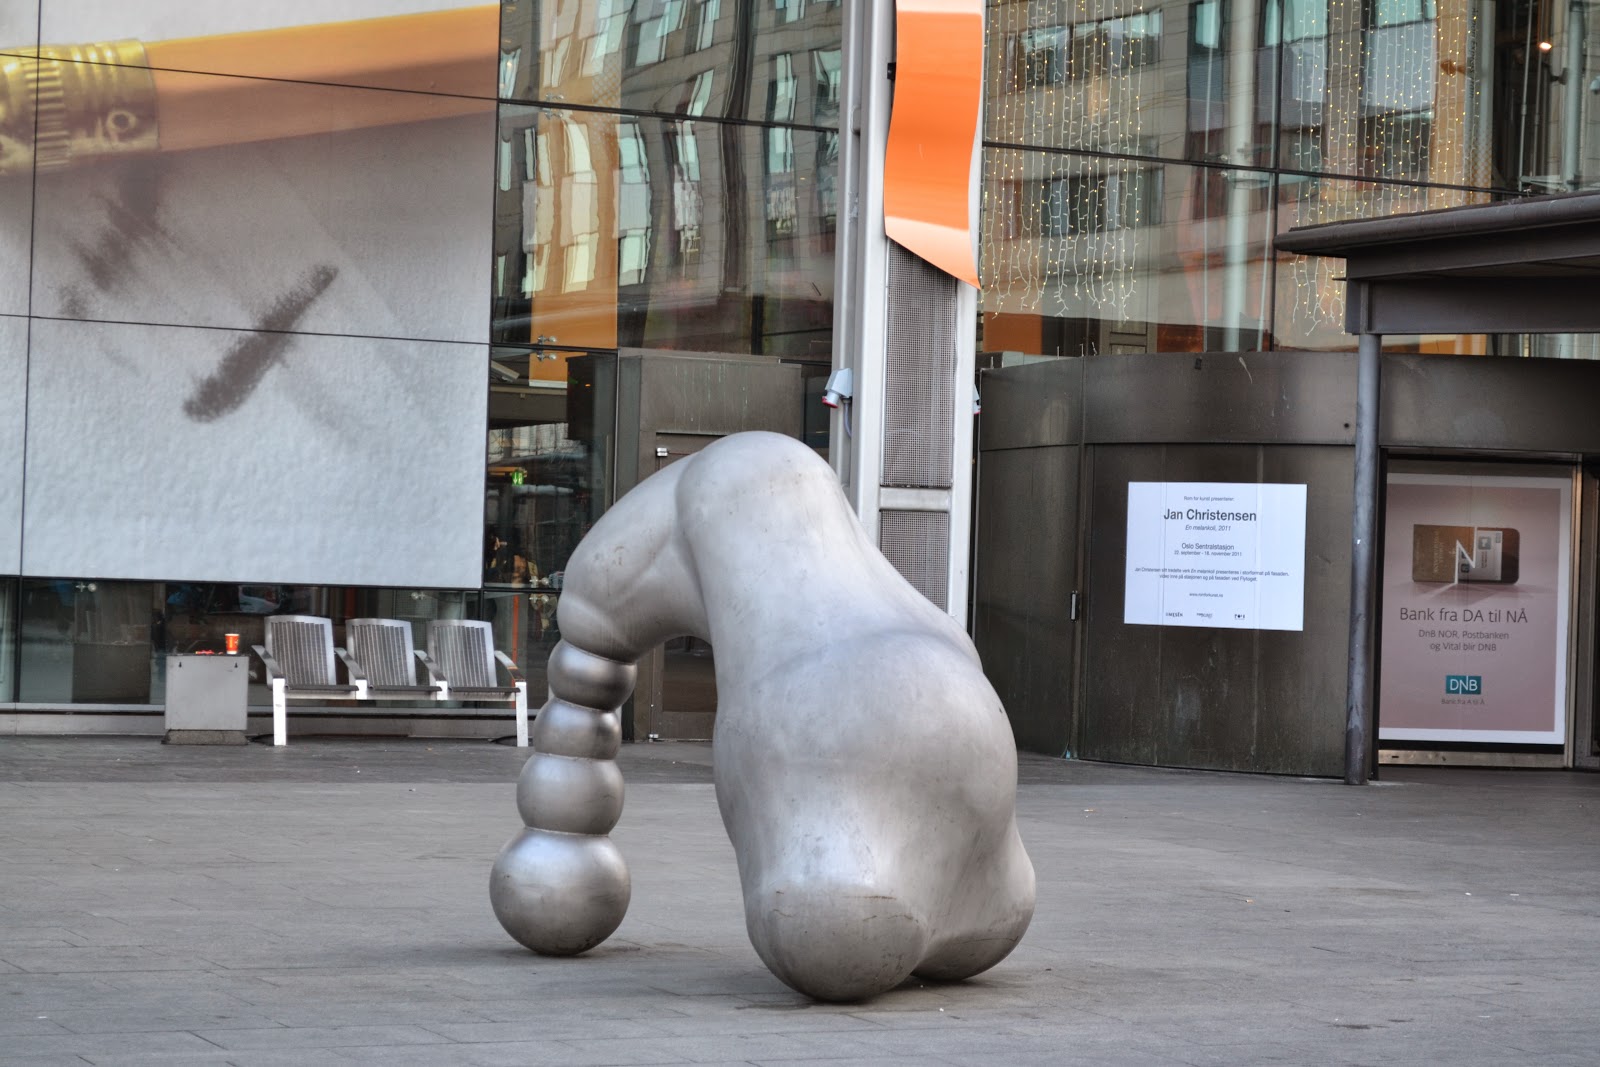 Sculpture near Oslo station